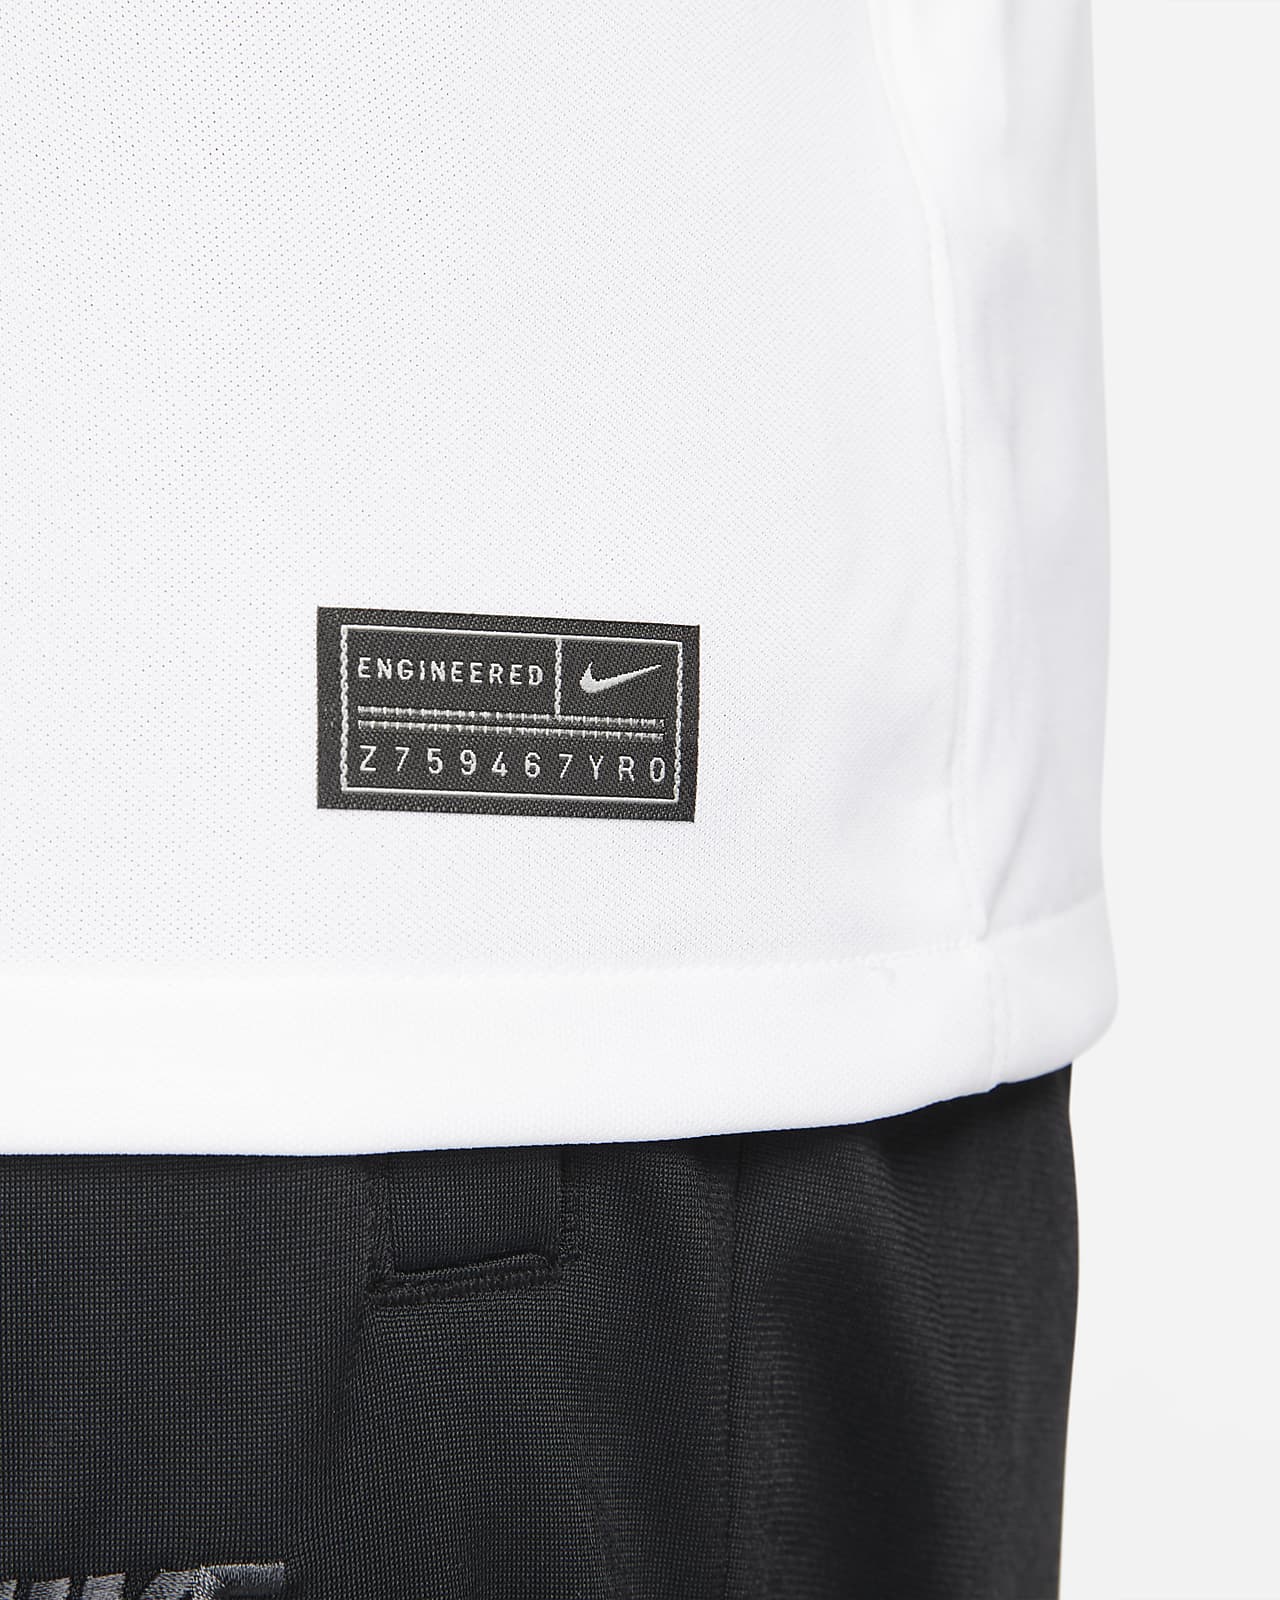 Nike White Blank Soccer Jersey Size Medium Dri-Fit Silver Tag Center Swoosh